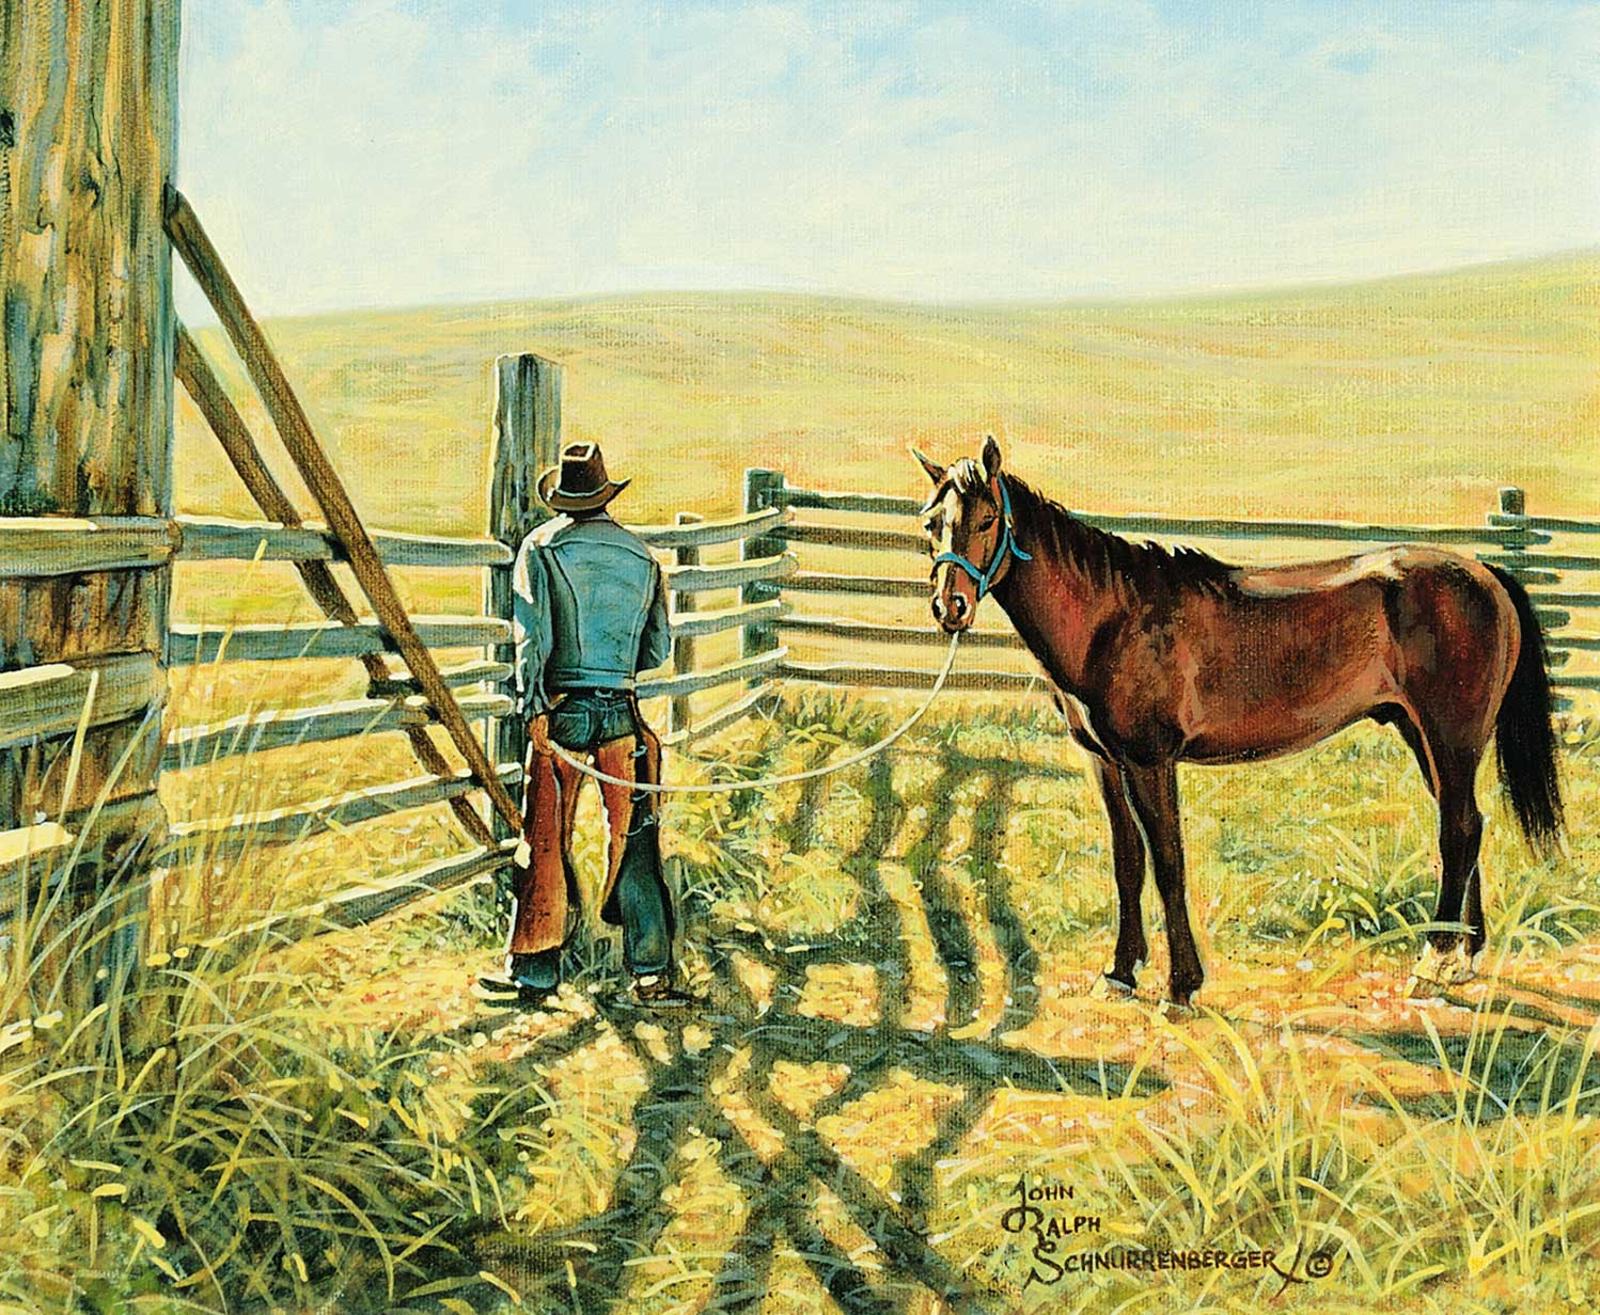 John Ralph Schnurrenberger (1941) - Getting His Jingle Horse